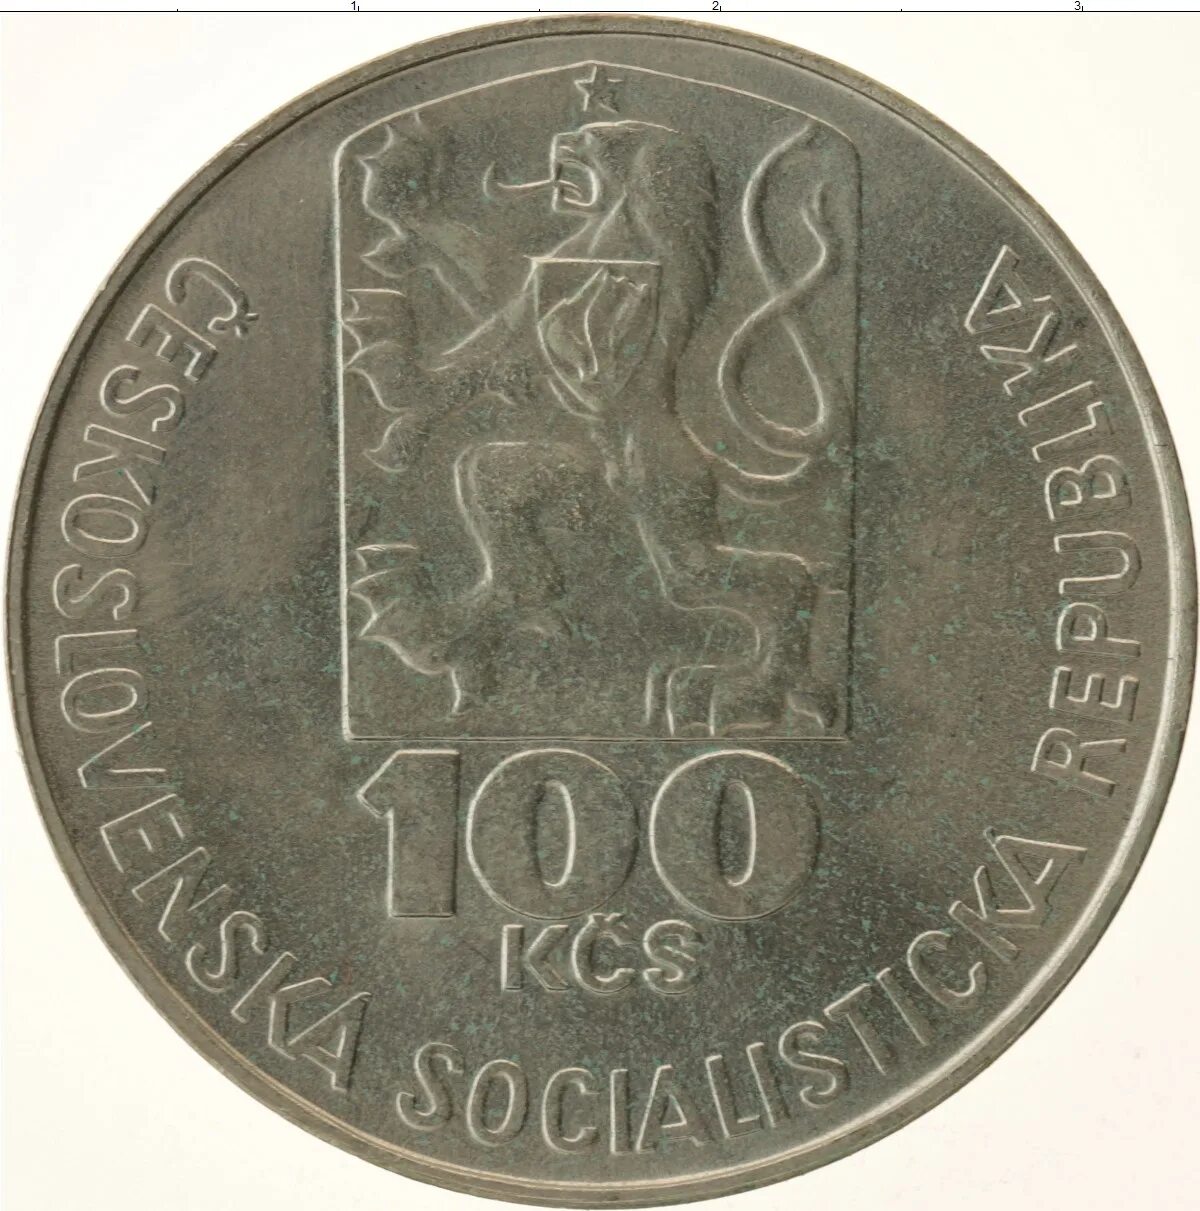 100 крон. 10 Чехословацких крон 1977. Монета 100 рублей 1977 года. Чешские монеты 1977 1. 100 Крон платина.